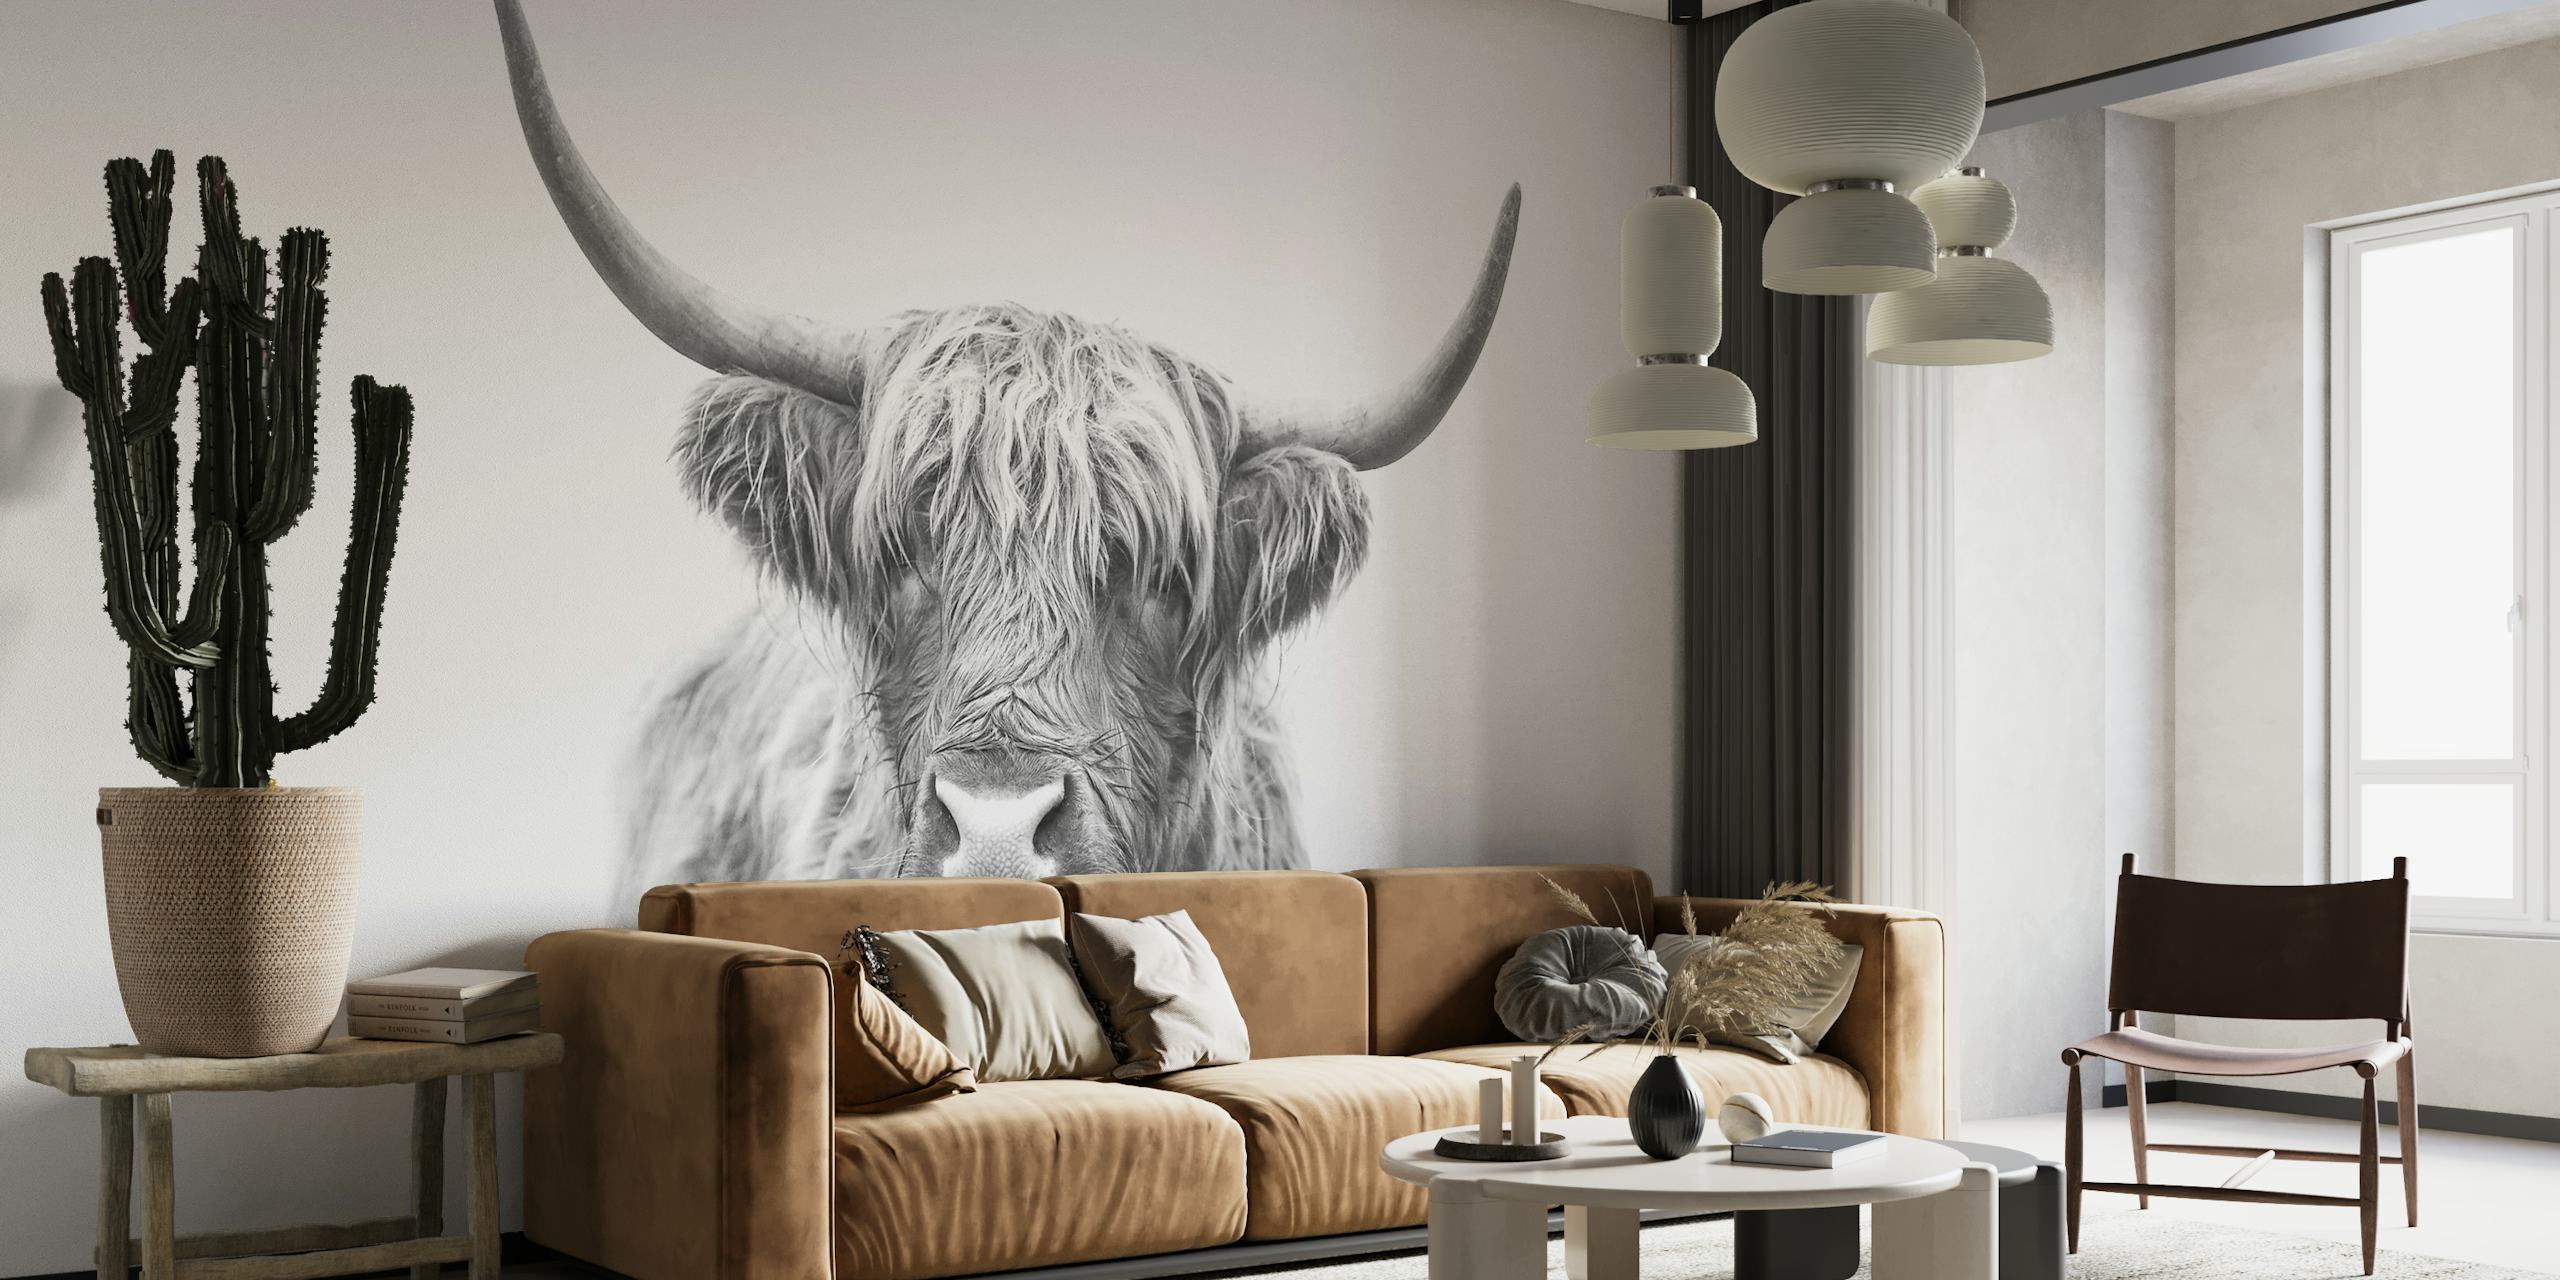 Highland Bull wallpaper